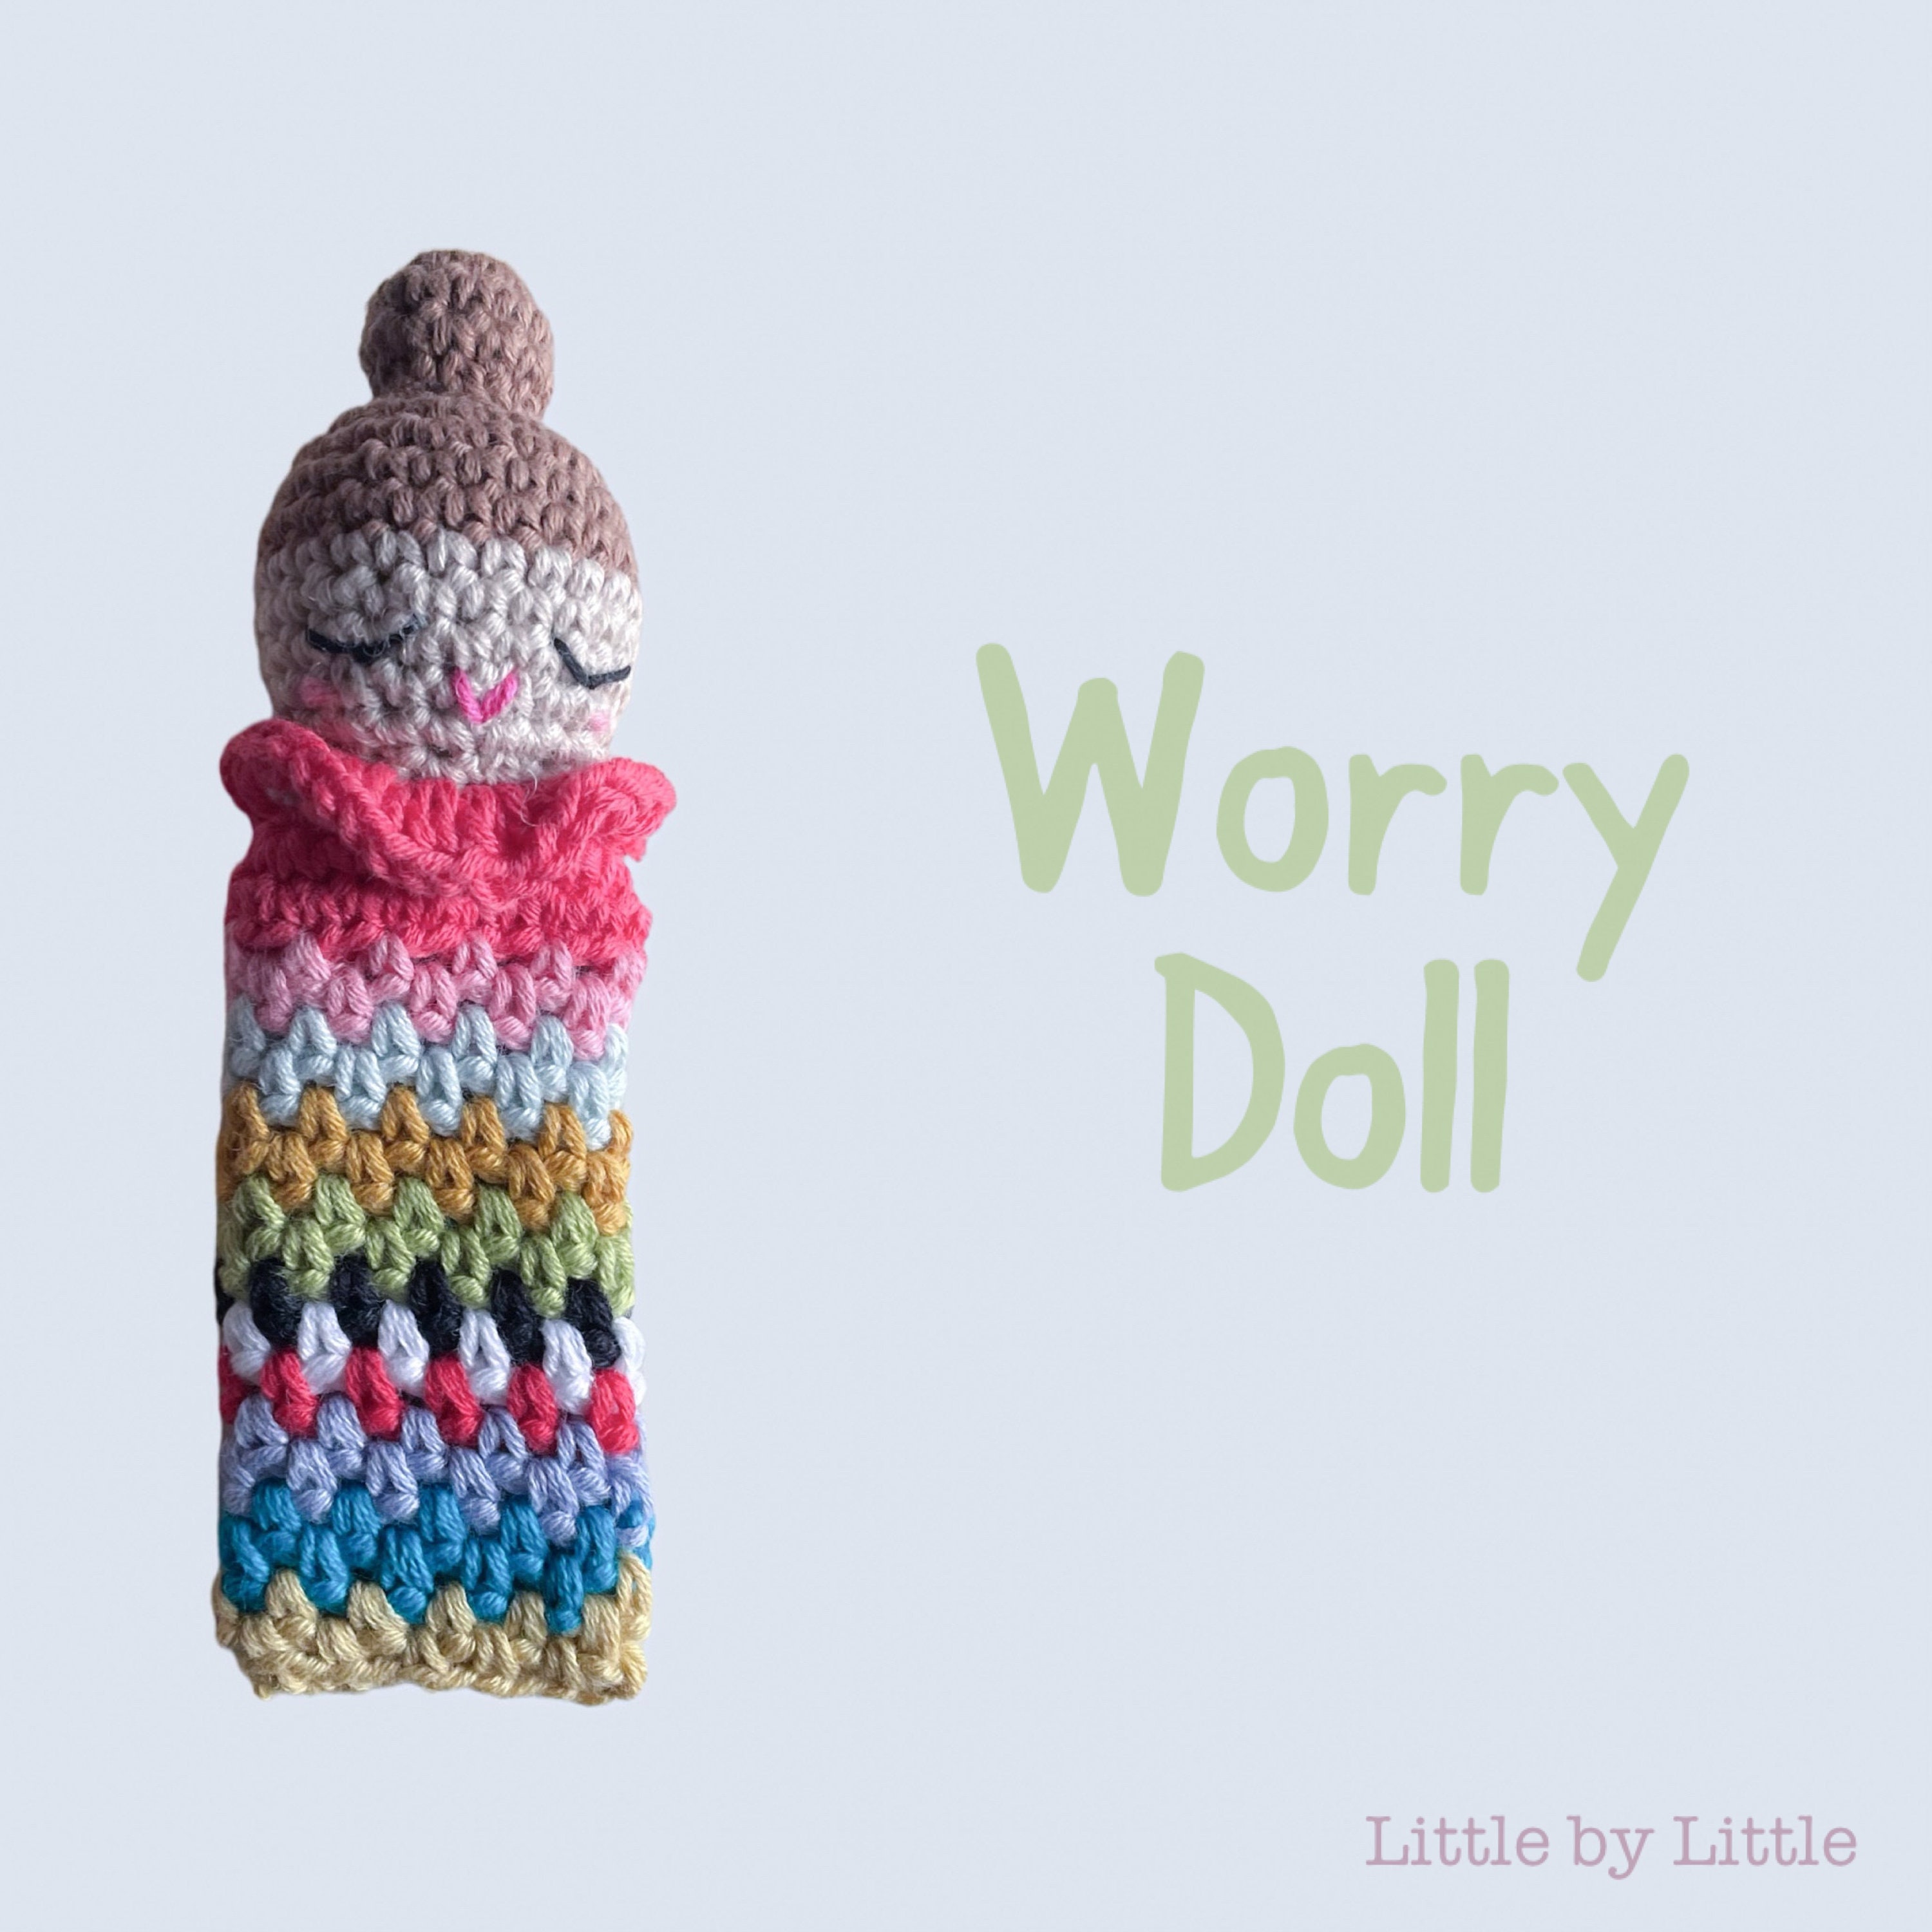 Worry doll - Wikipedia